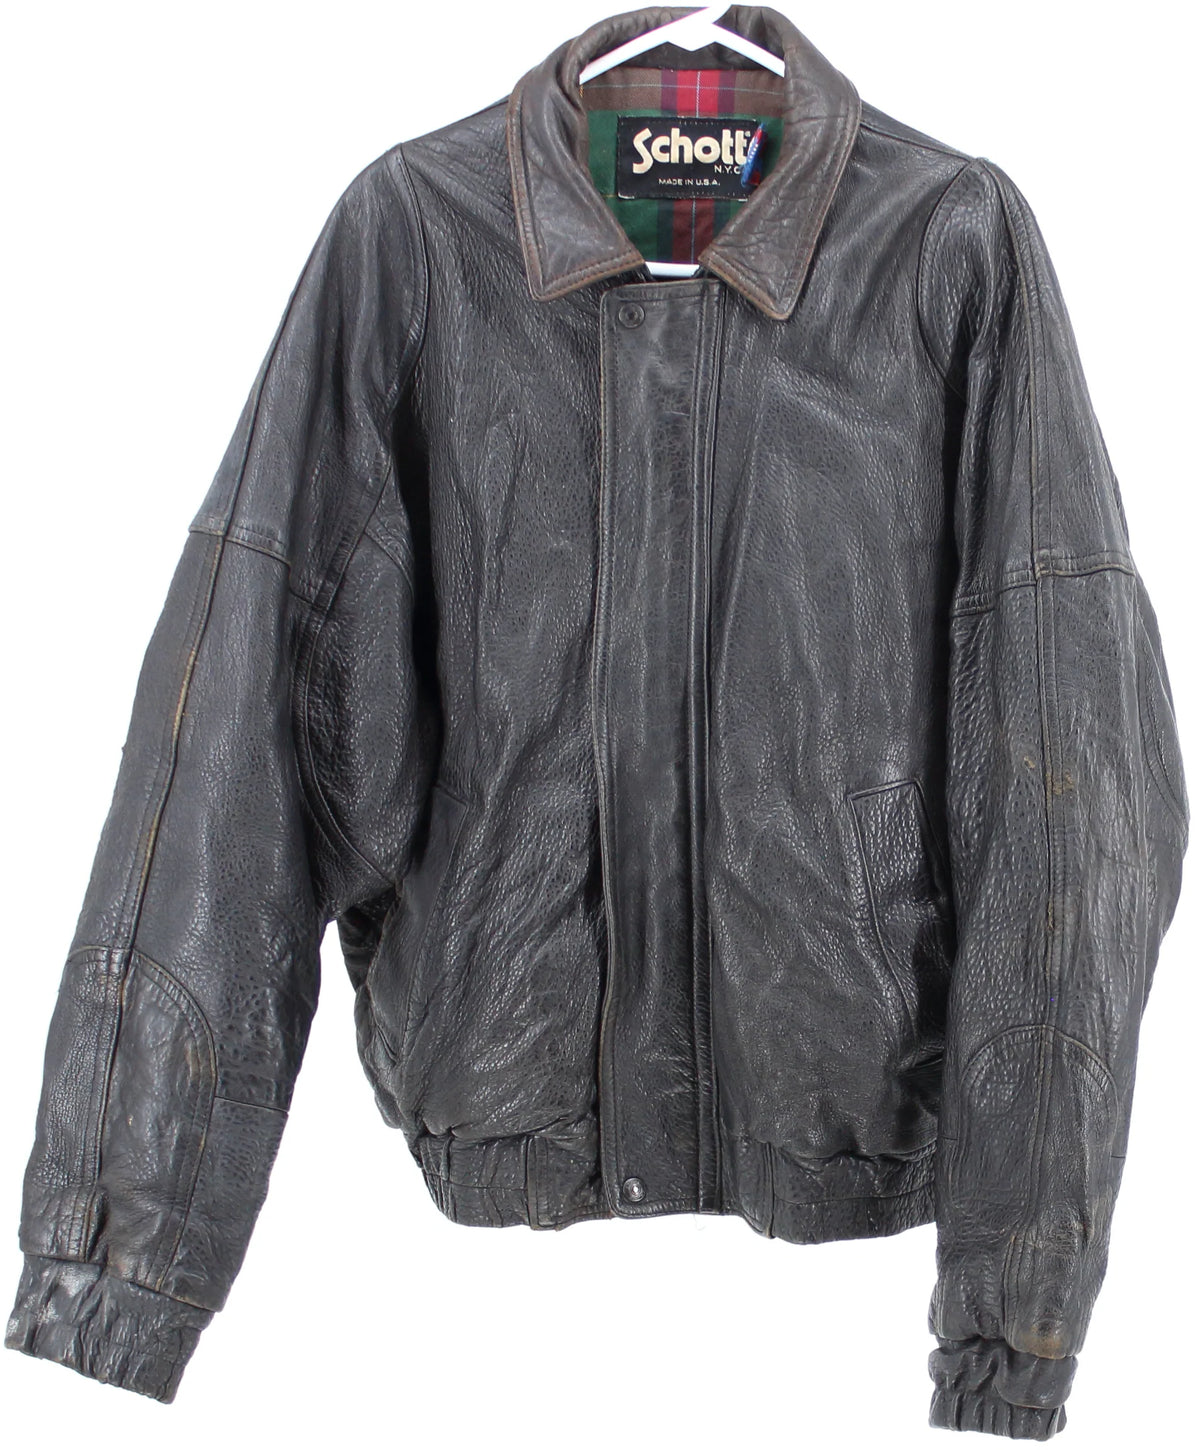 Schott N.Y.C. Black Leather Jacket